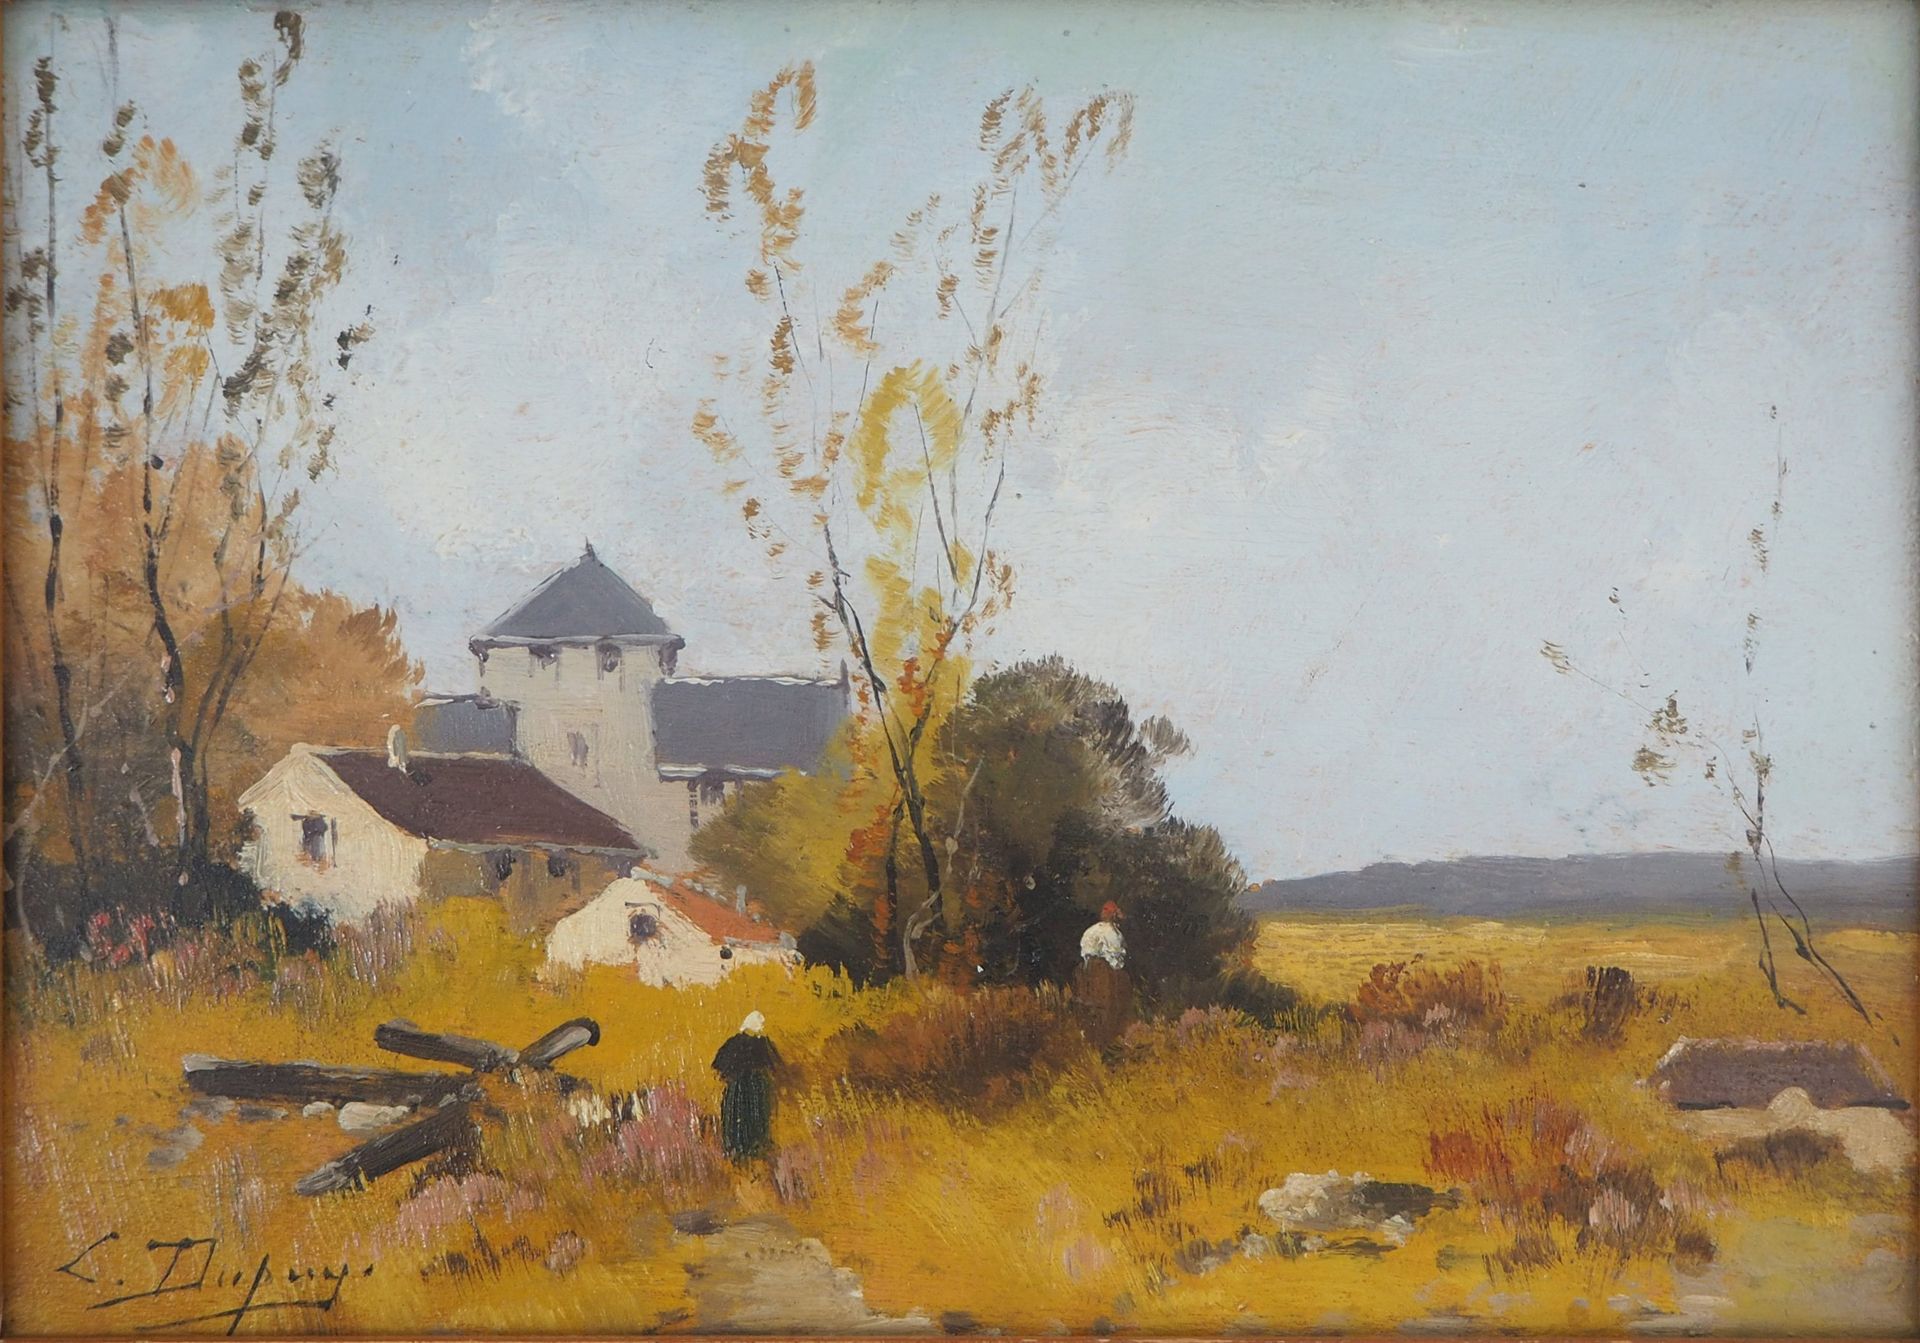 Eugène GALIEN-LALOUE Eugène Galien-Laloue (1854-1941)

Granja en otoño

Óleo sob&hellip;